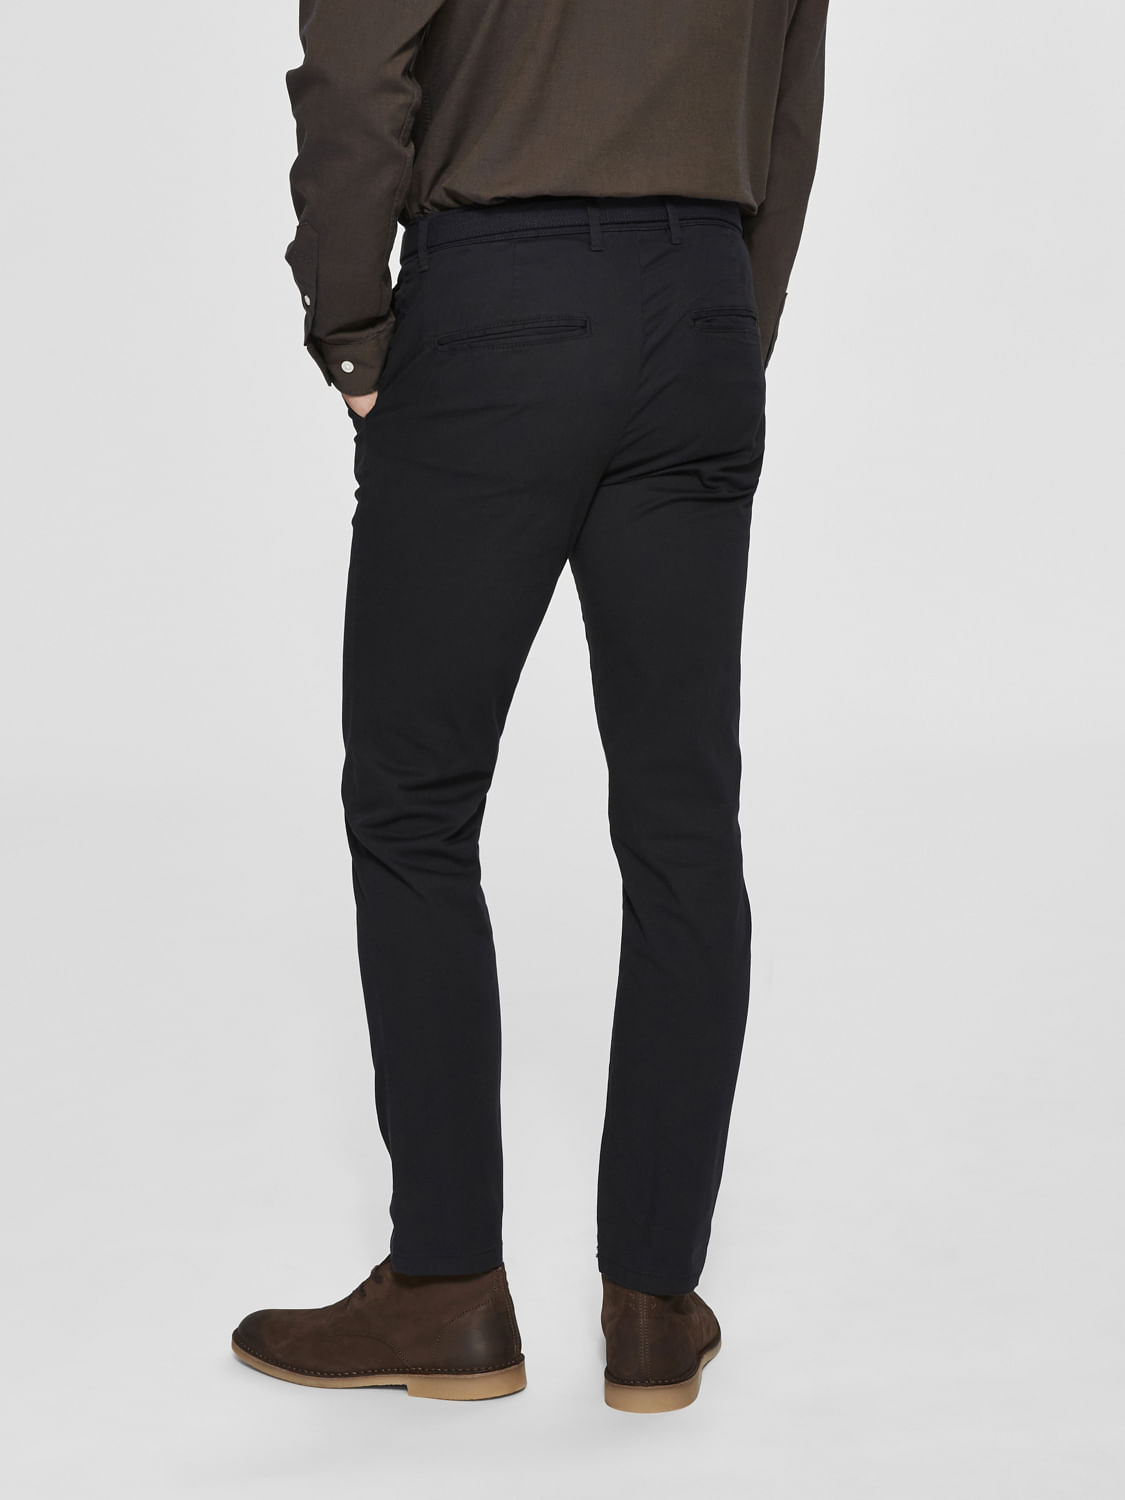 Buy Men Black Textured Slim Fit Chinos Online - 355124 | Peter England